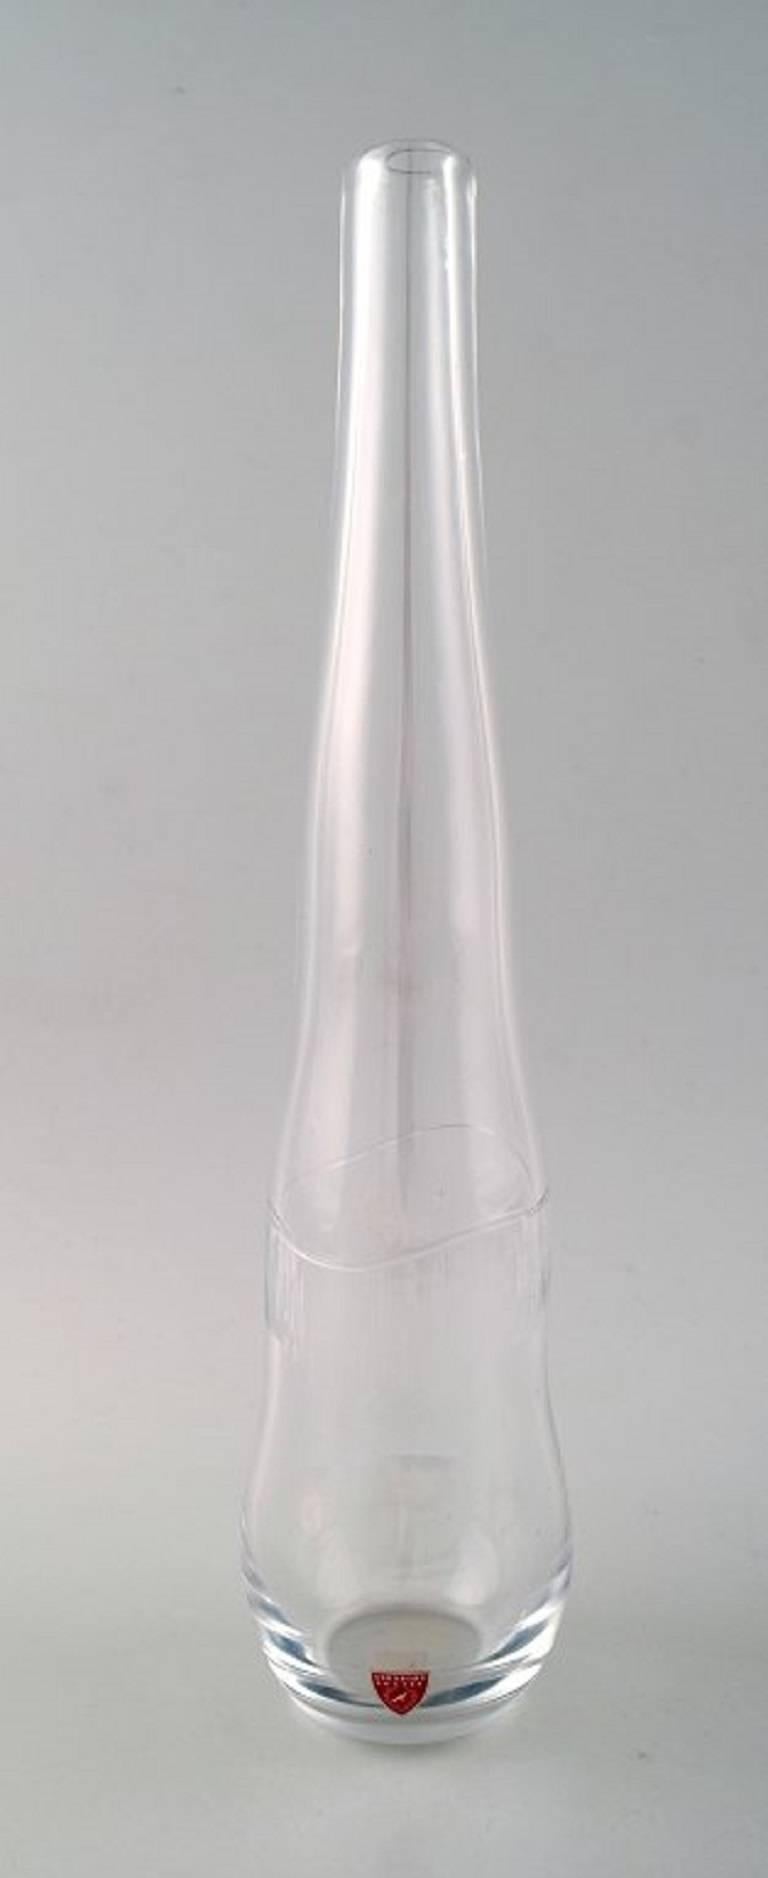 Large Orrefors art glass vase, stylish Swedish design, 1950s-1960s.

Signed: Orrefors fa 3453/1.

Measures: 32 cm high.

In good condition.